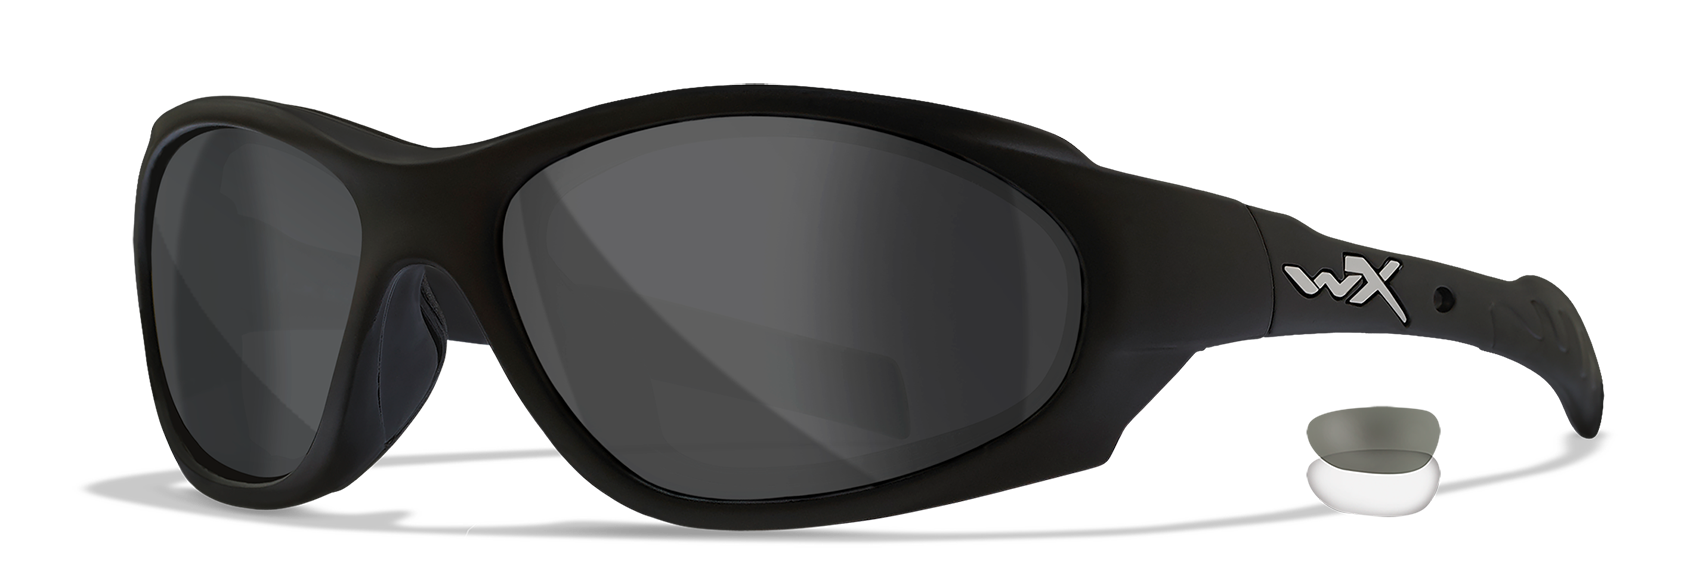 Wiley X XL-1 ADVANCED Full Rim Sunglasses  Matte Black 62-17-122